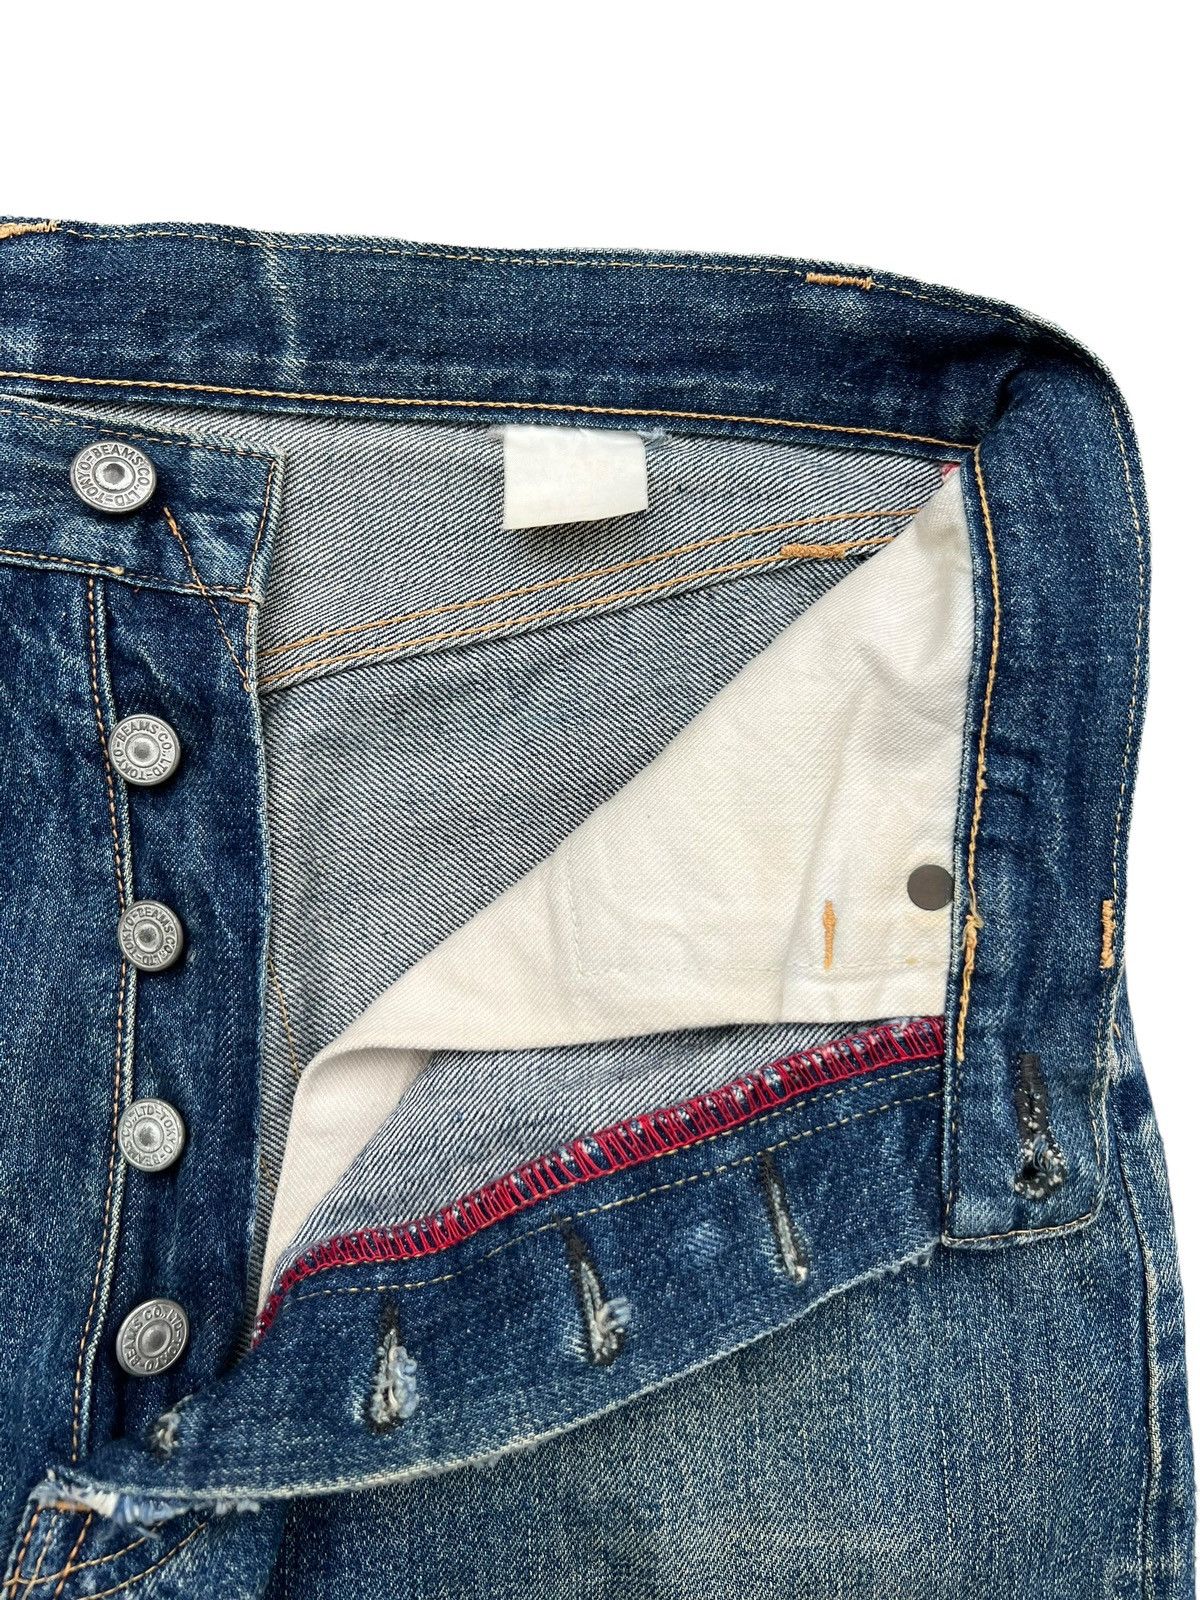 Vtg Beams Plus Japan Selvedge Distressed Mudwash Denim Jeans - 14